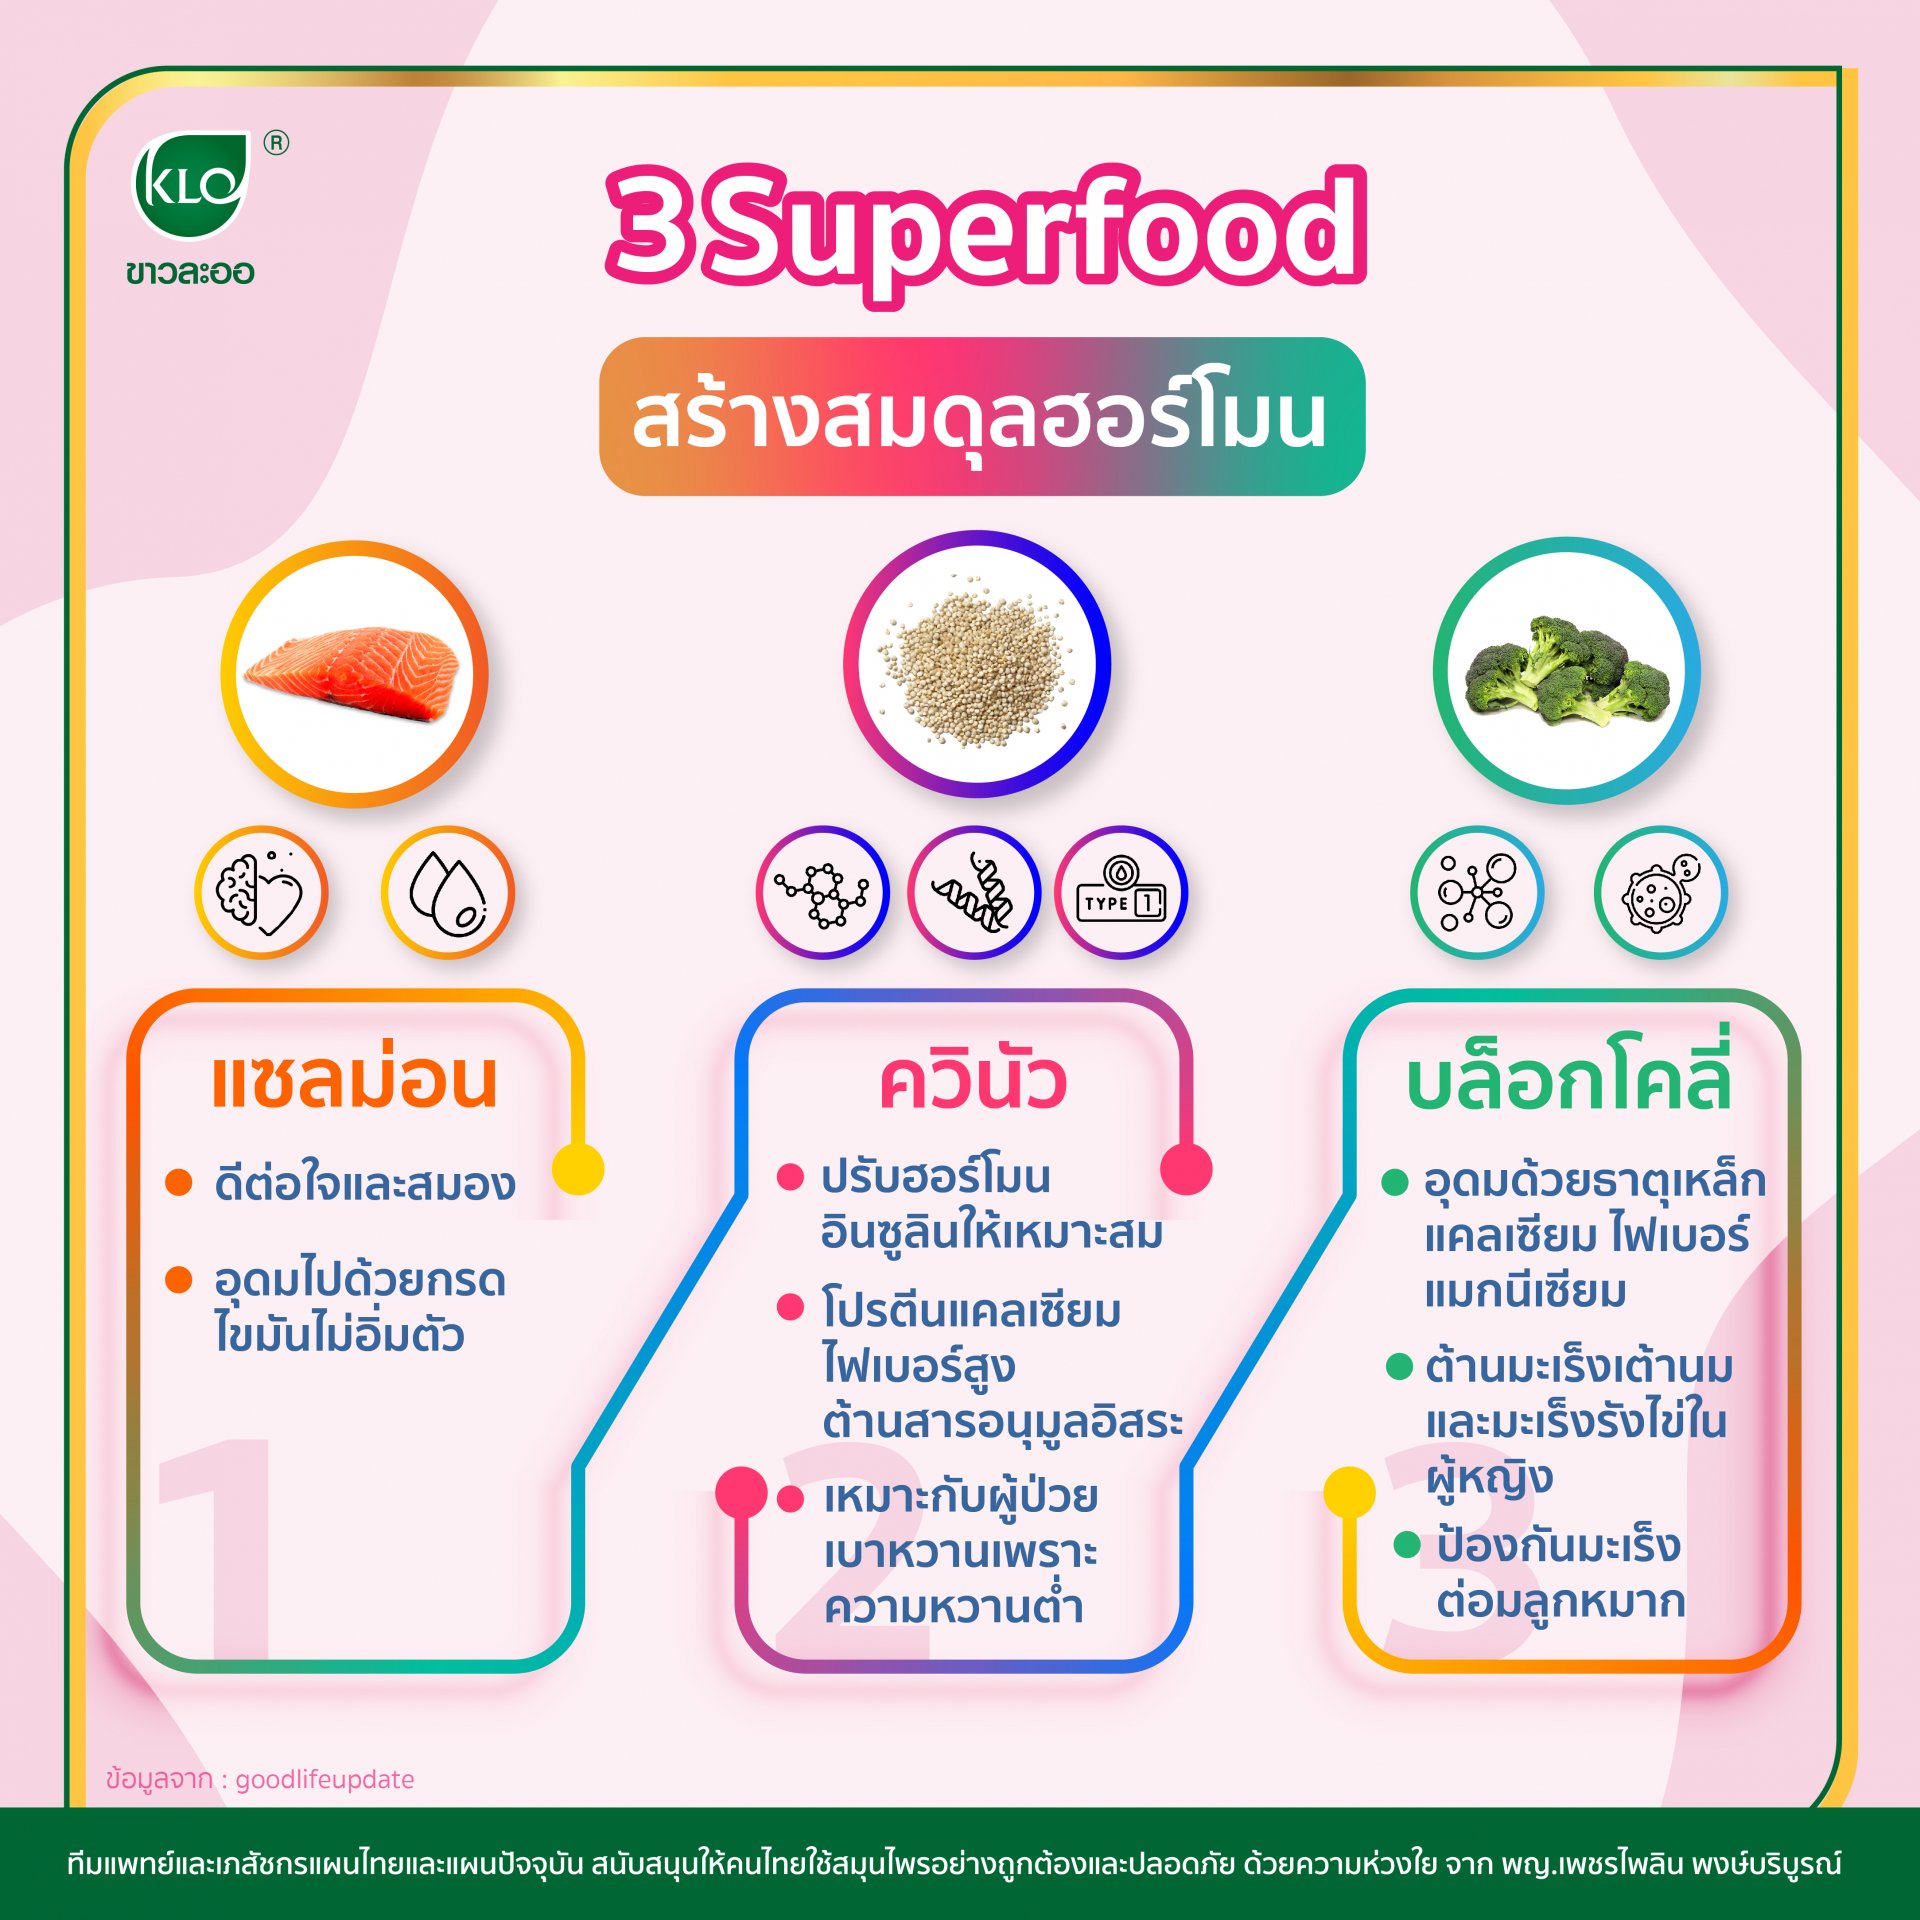 3 Superfood balances hormones